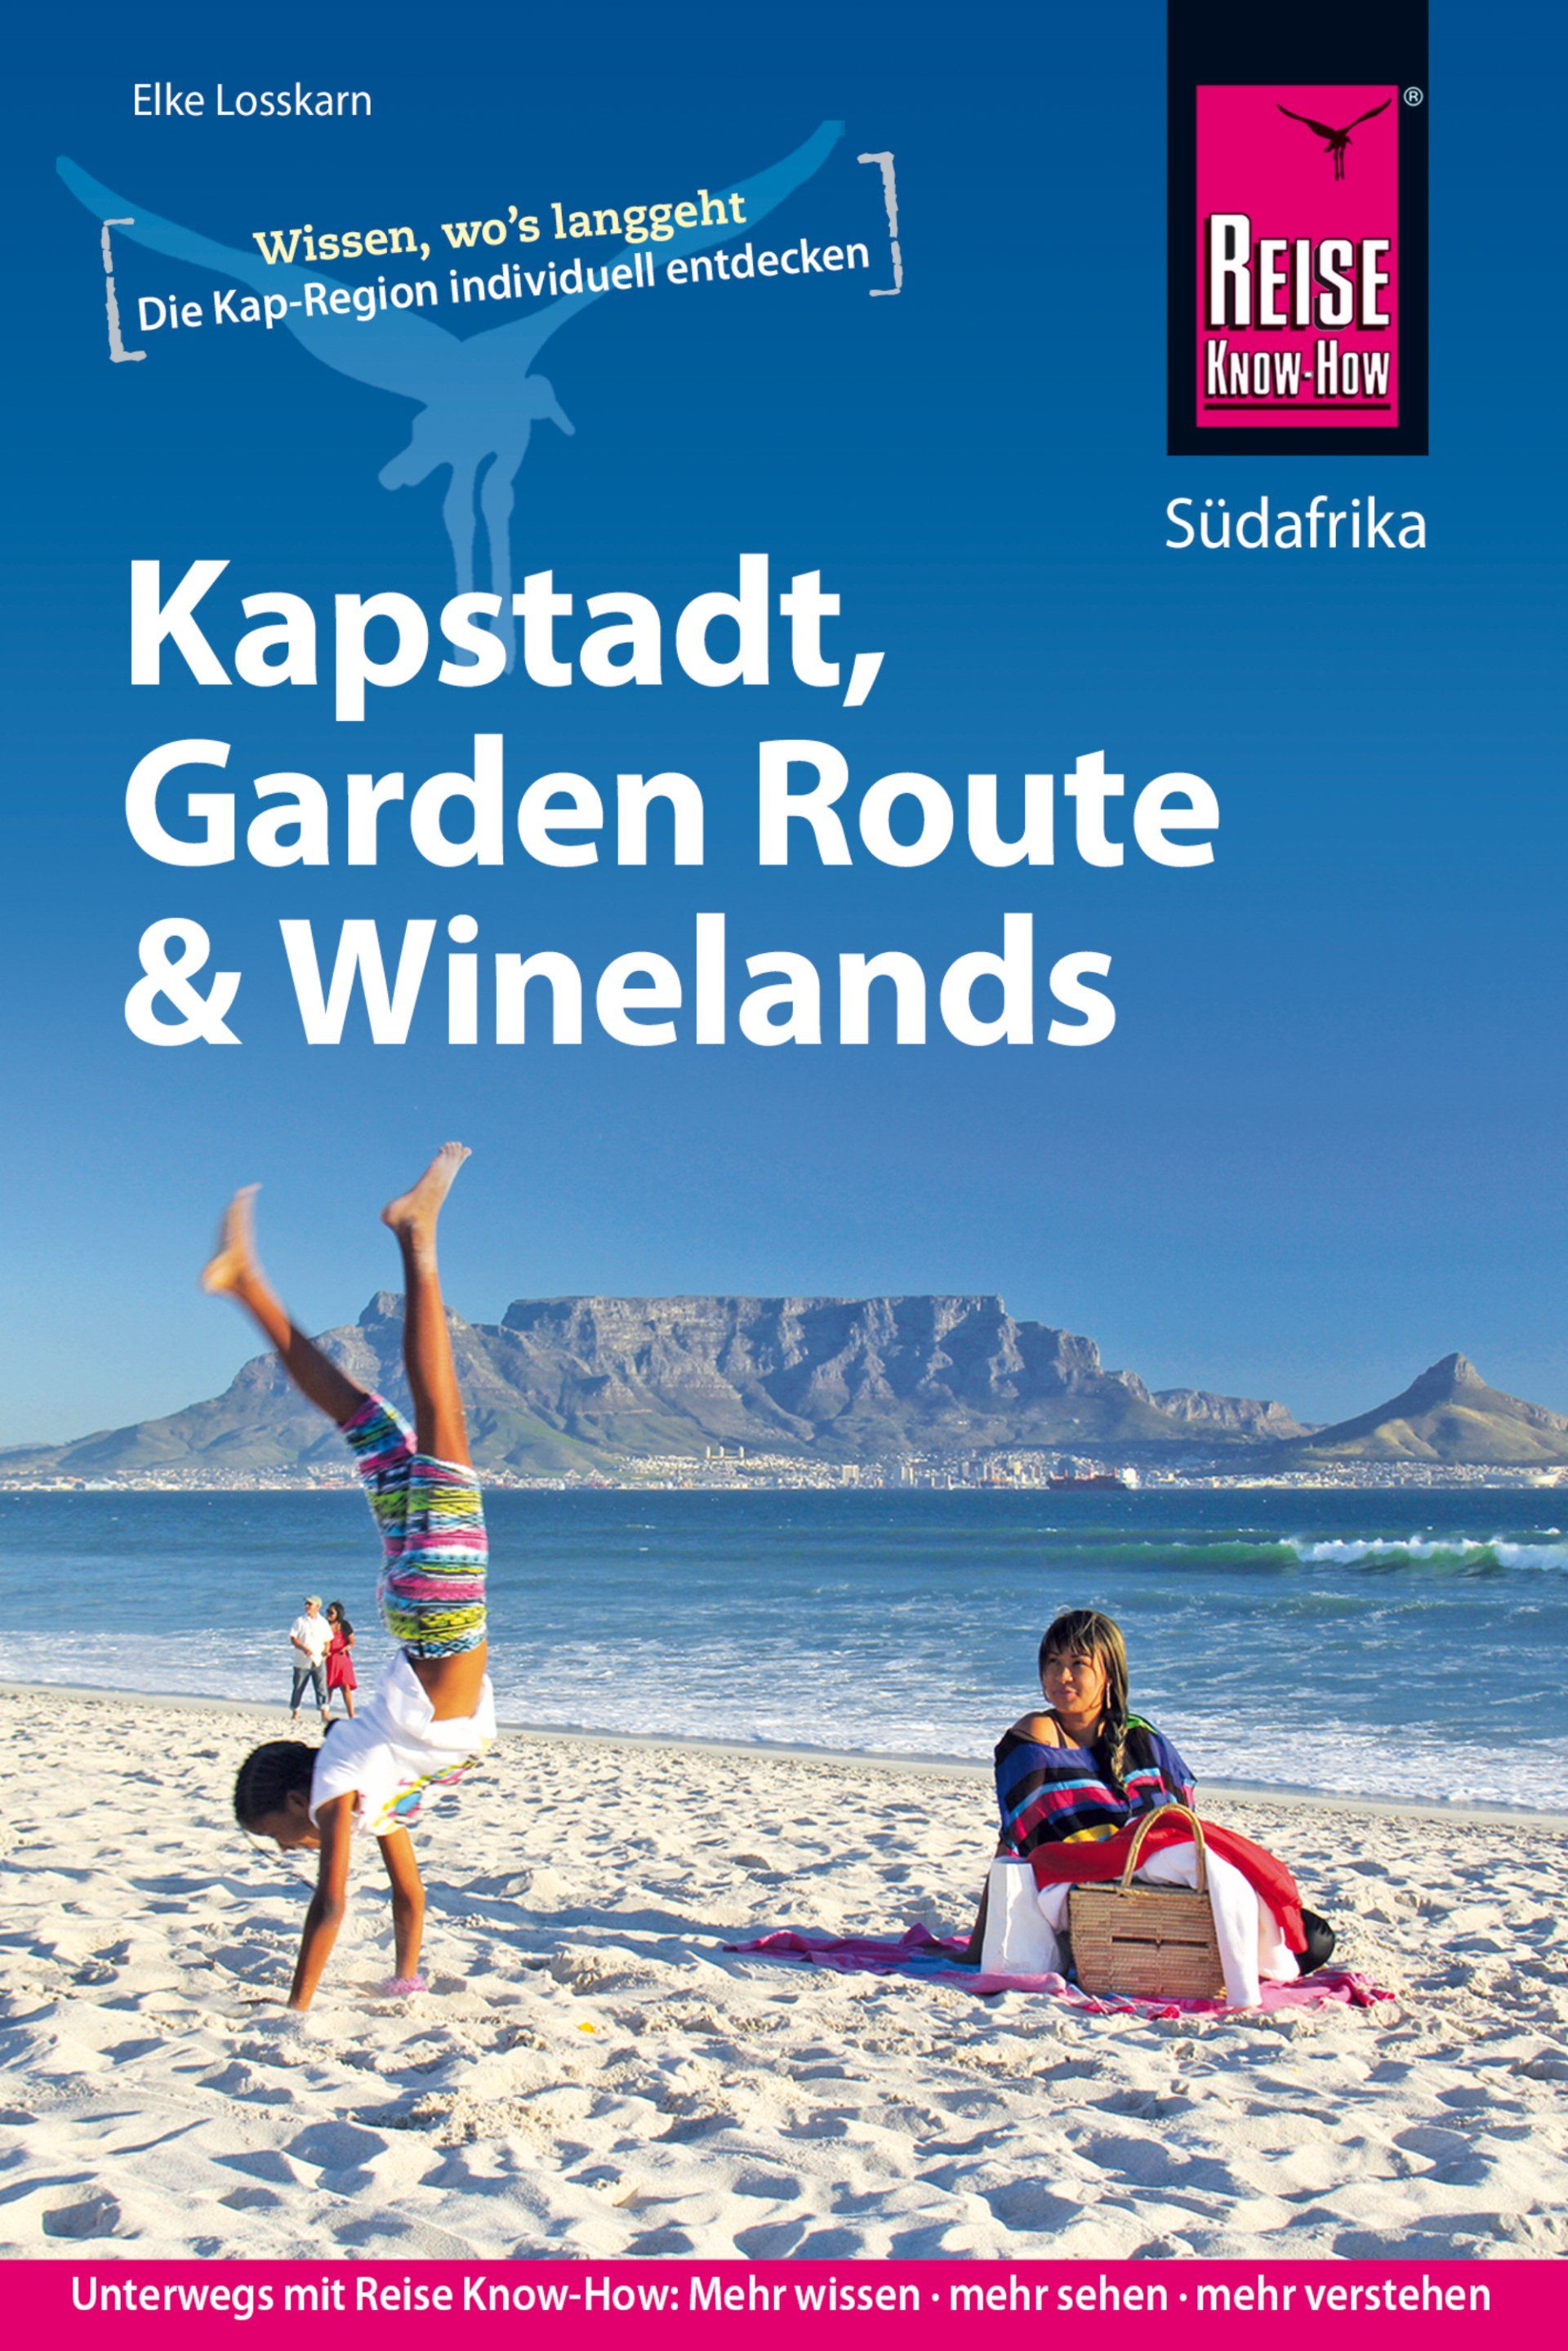 Reiseführer, Südafrika, Kapstadt, Garden Route, Winelands, Afrika